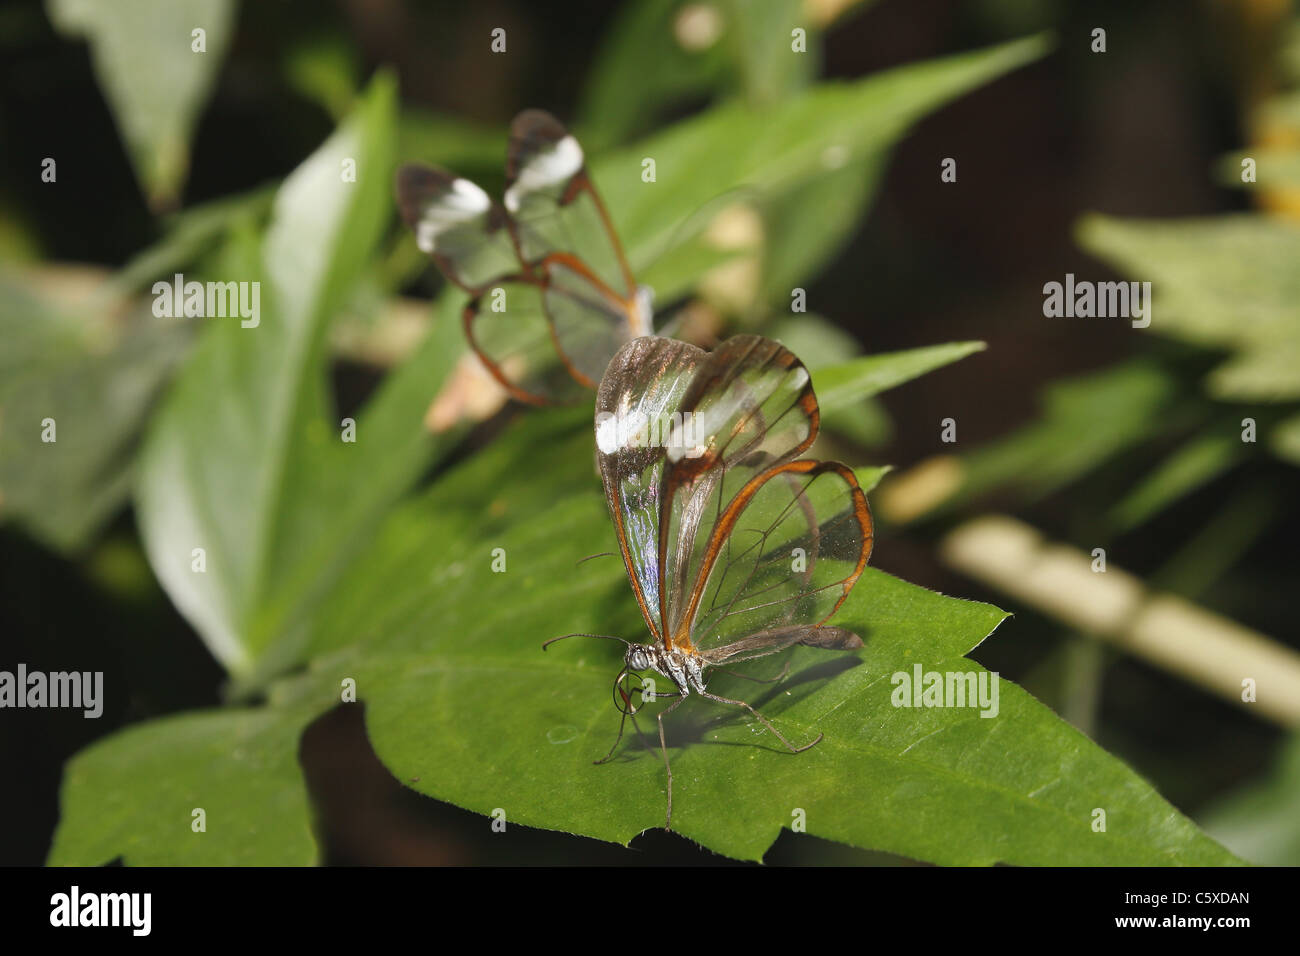 glasswing butterfly on leaf Stock Photo